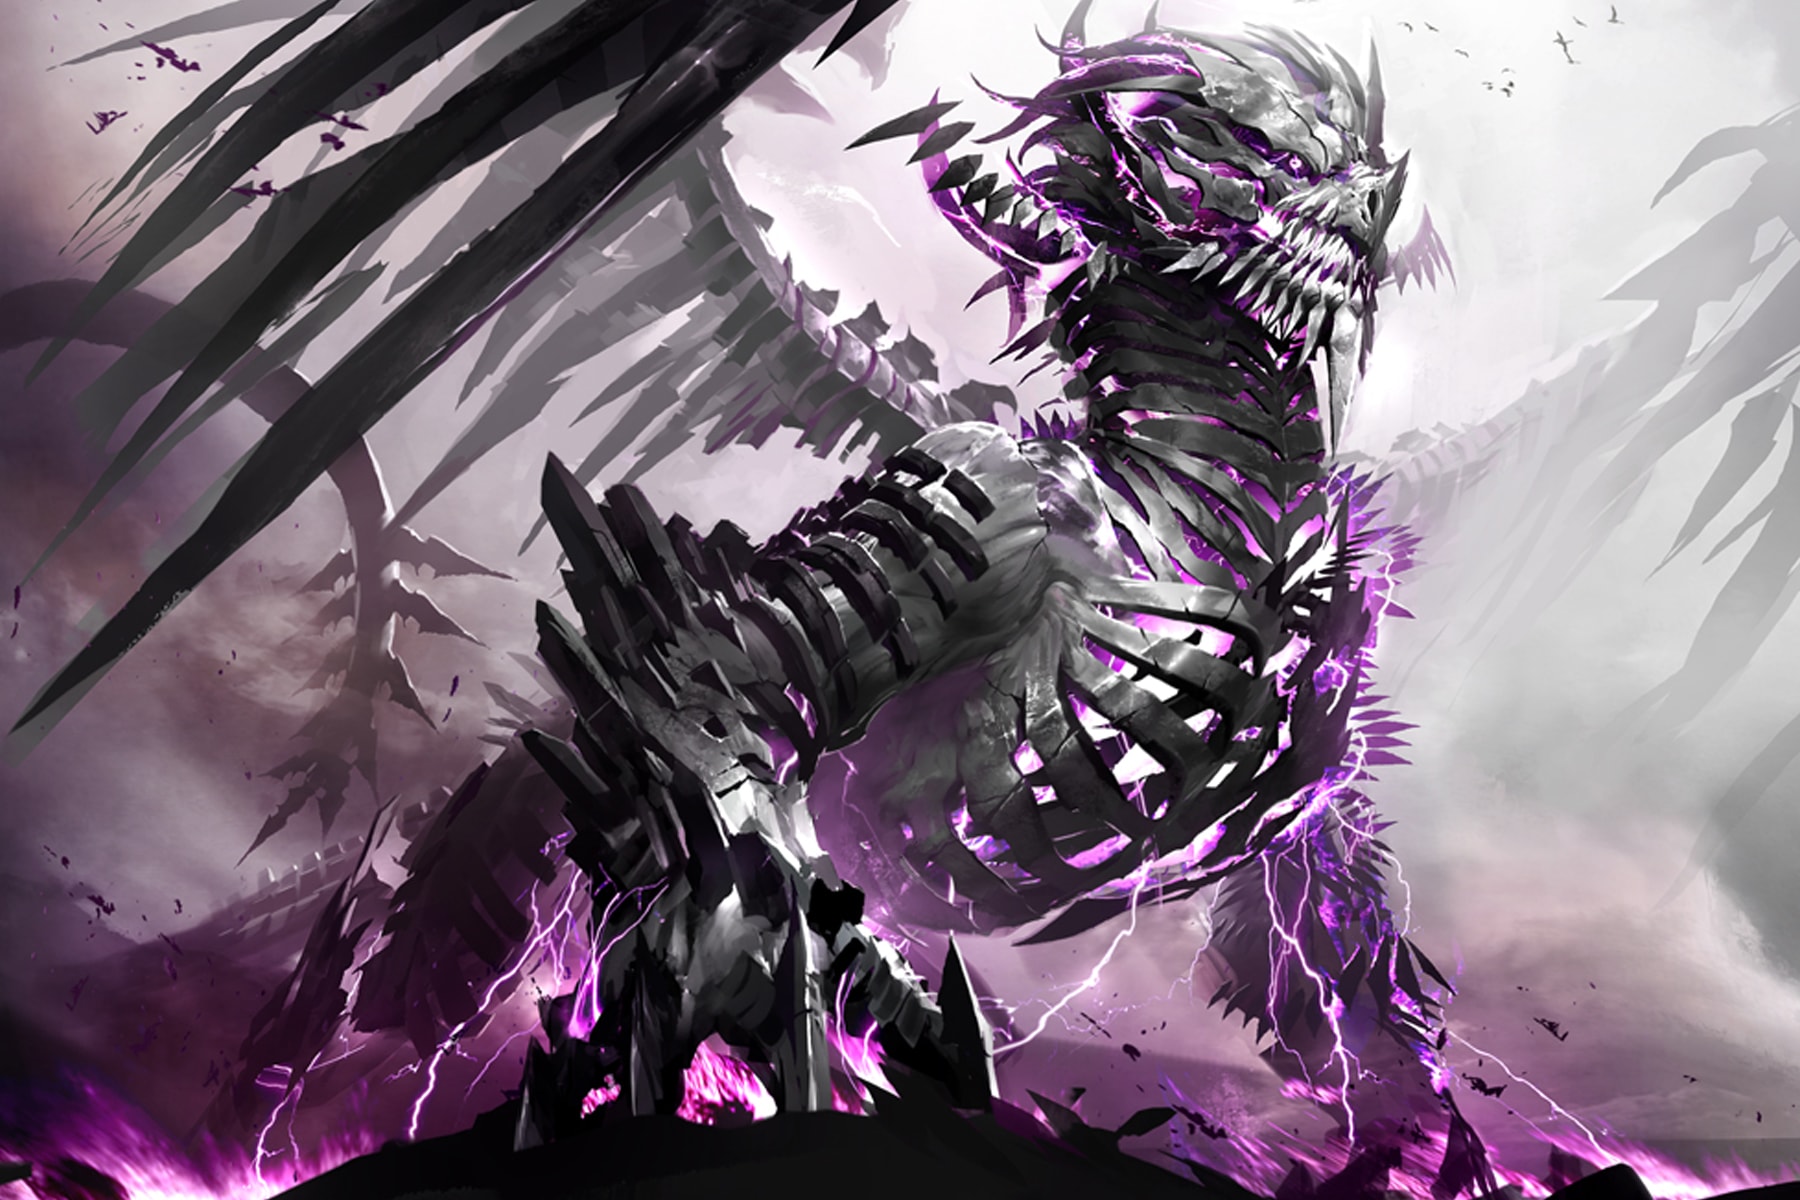 Illustration of Guild Wars 2 world boss The Shatterer, an enormous dragon generating purple lightning